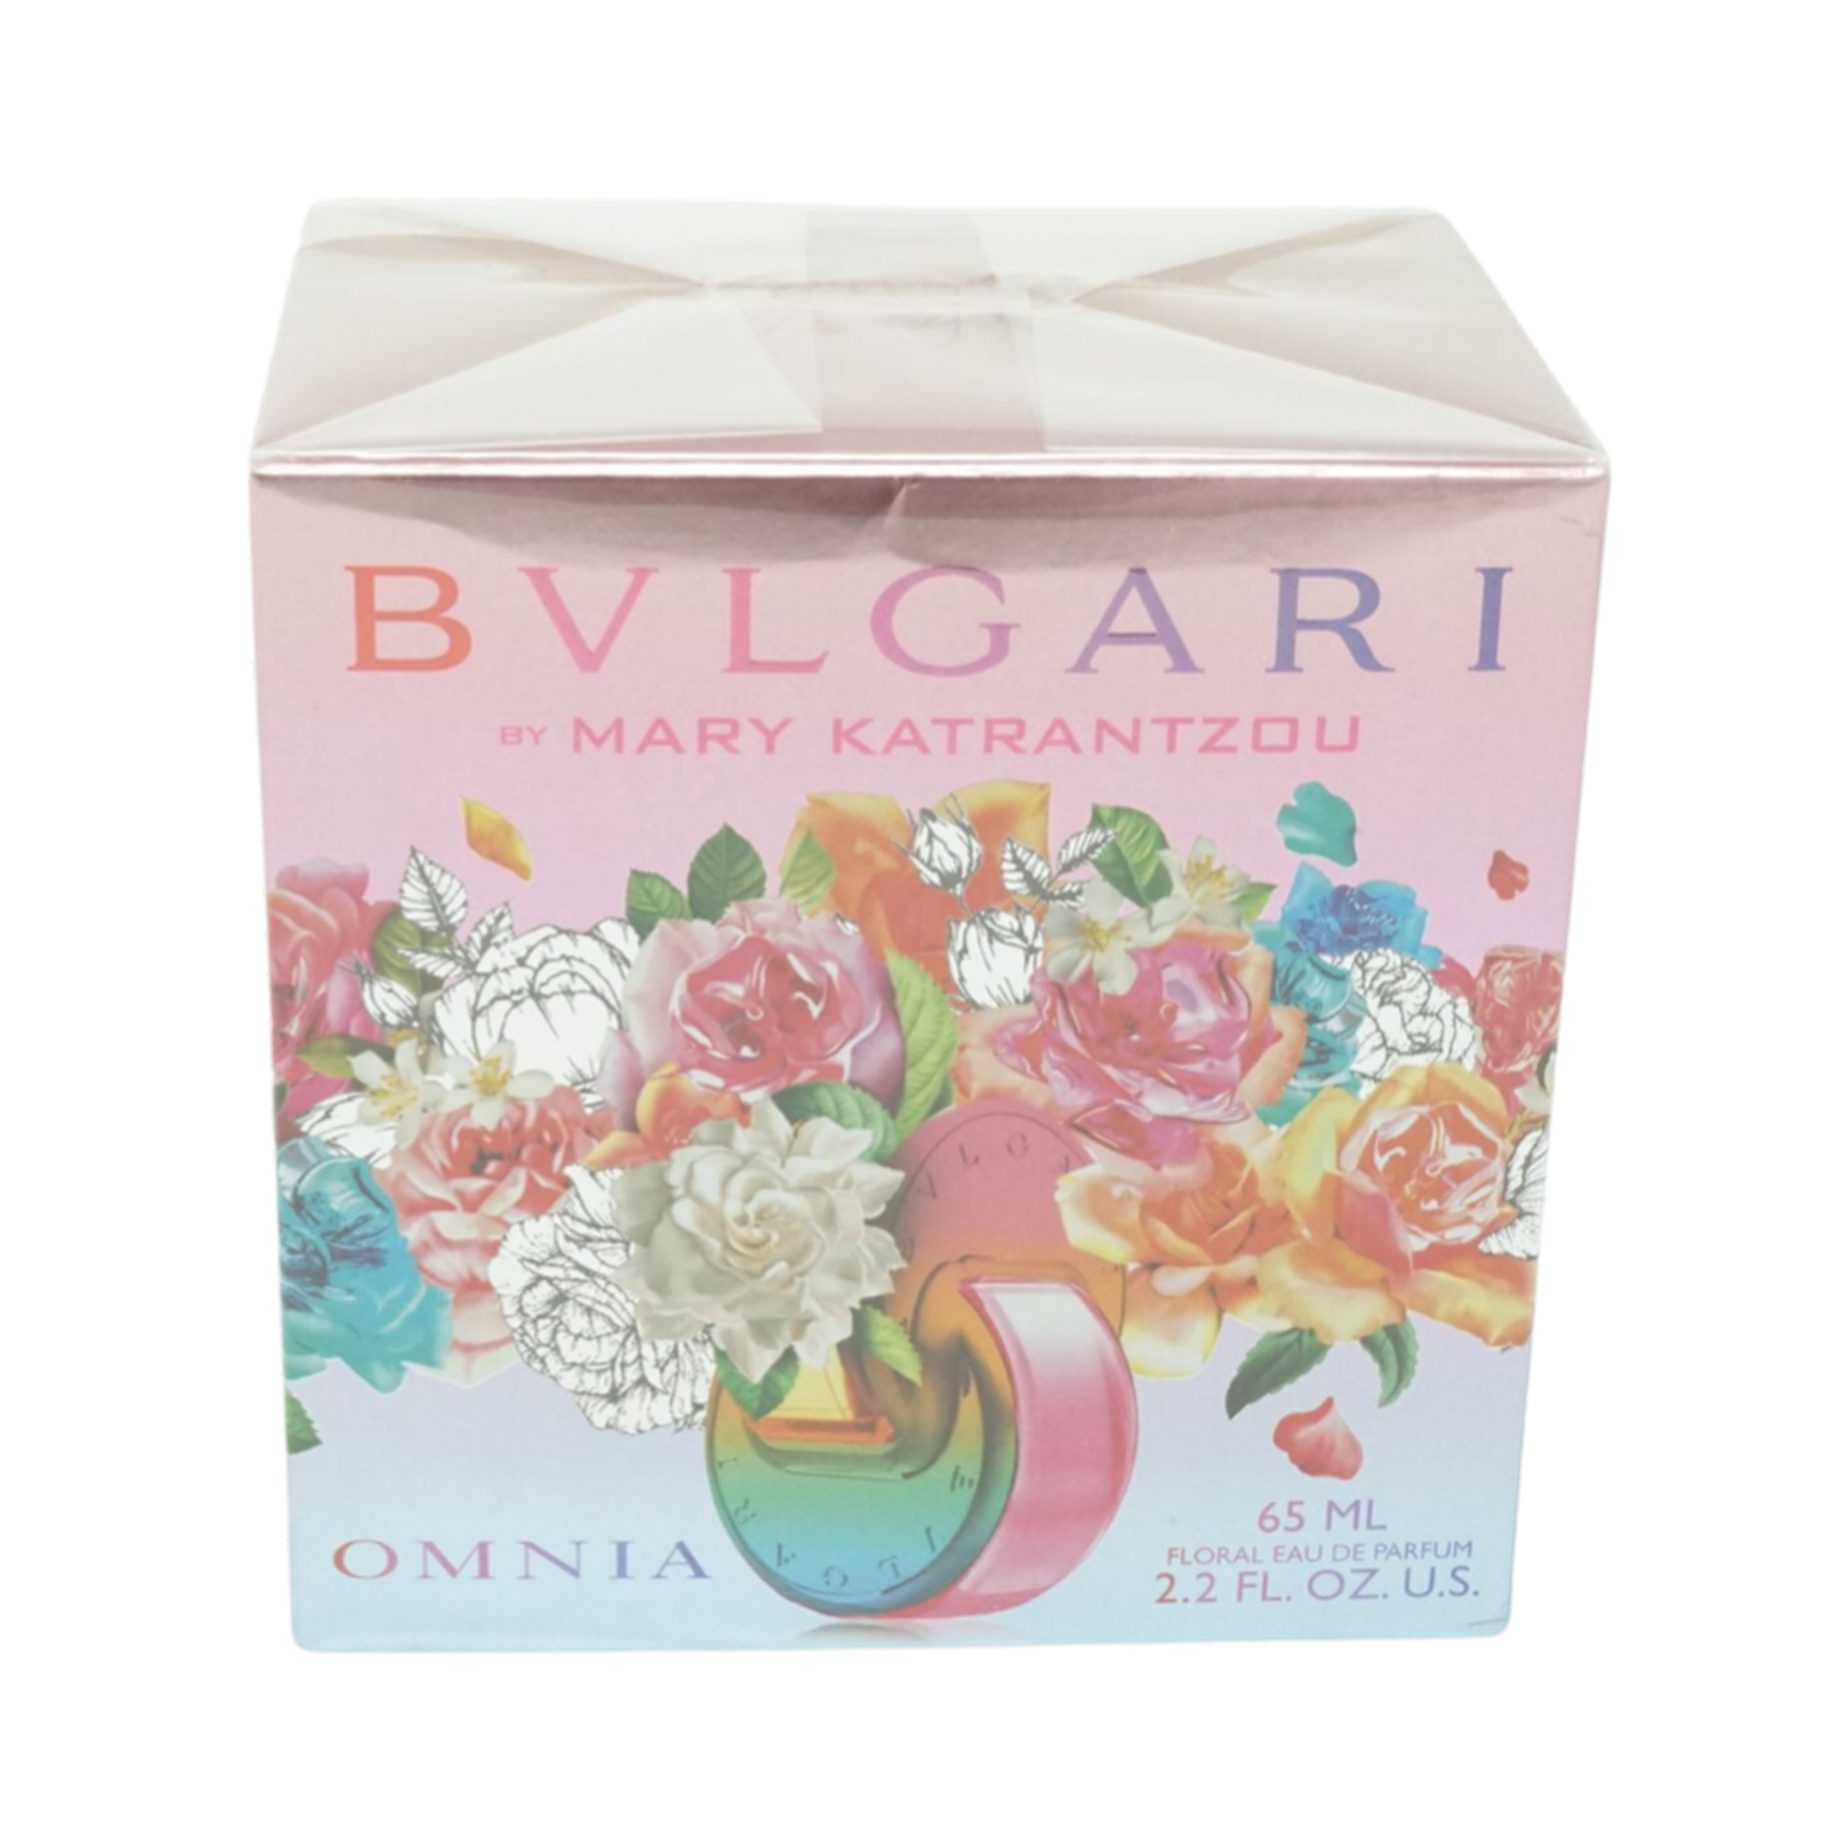 BVLGARI Eau de Parfum Bvlgari by Mary Katrantzou Omnia Floral de Parfum 65 ml